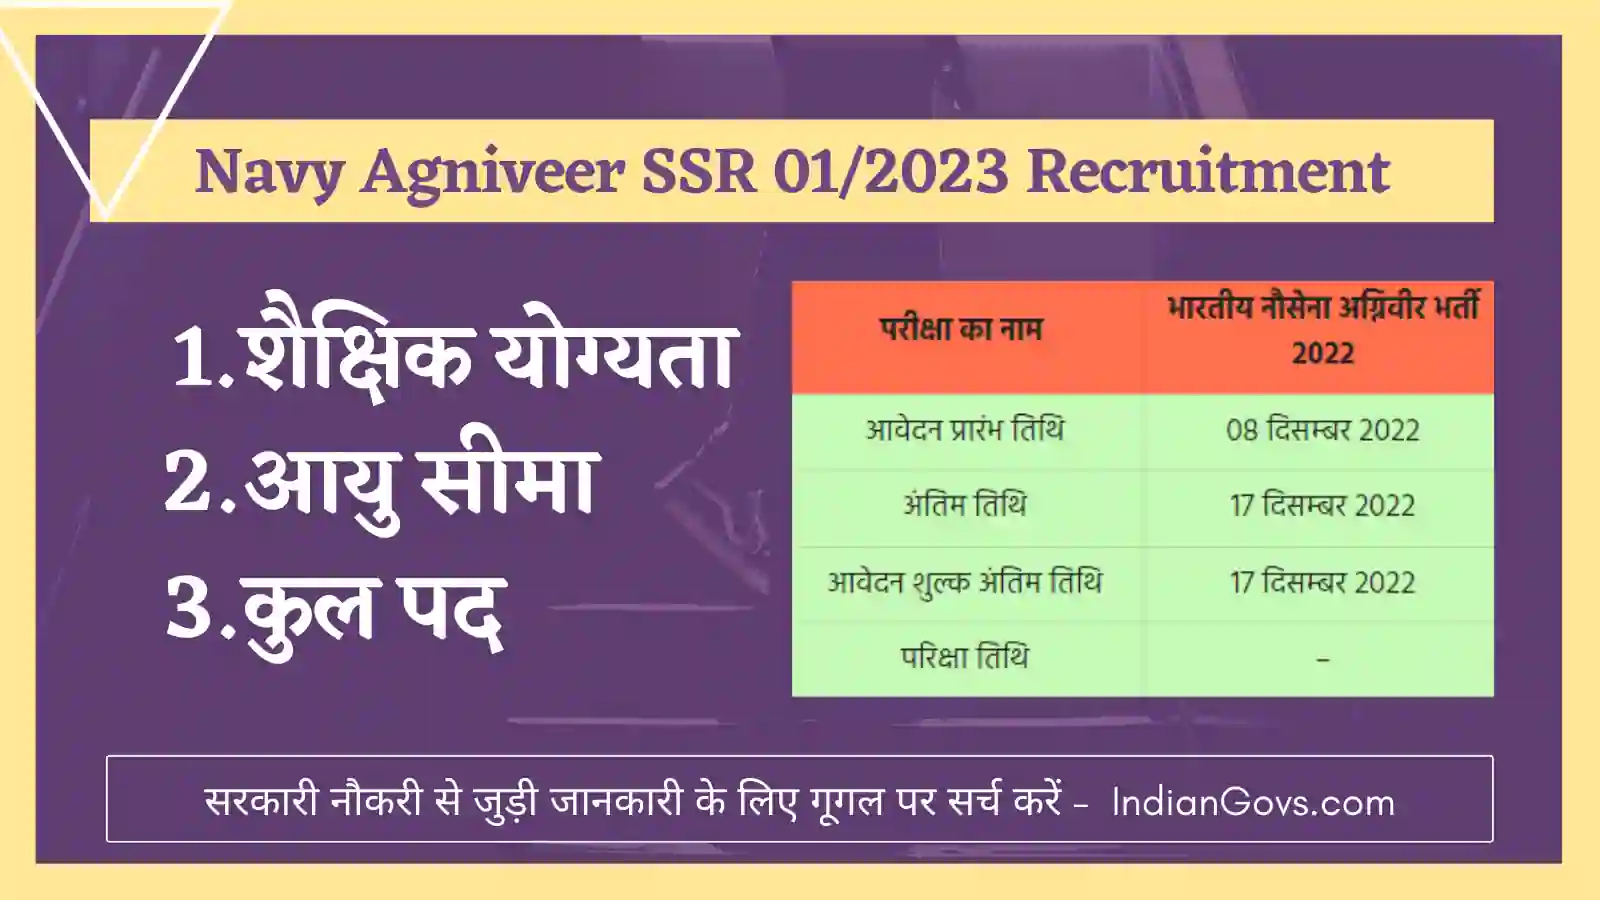 Navy Agniveer SSR 01/2023 Recruitment